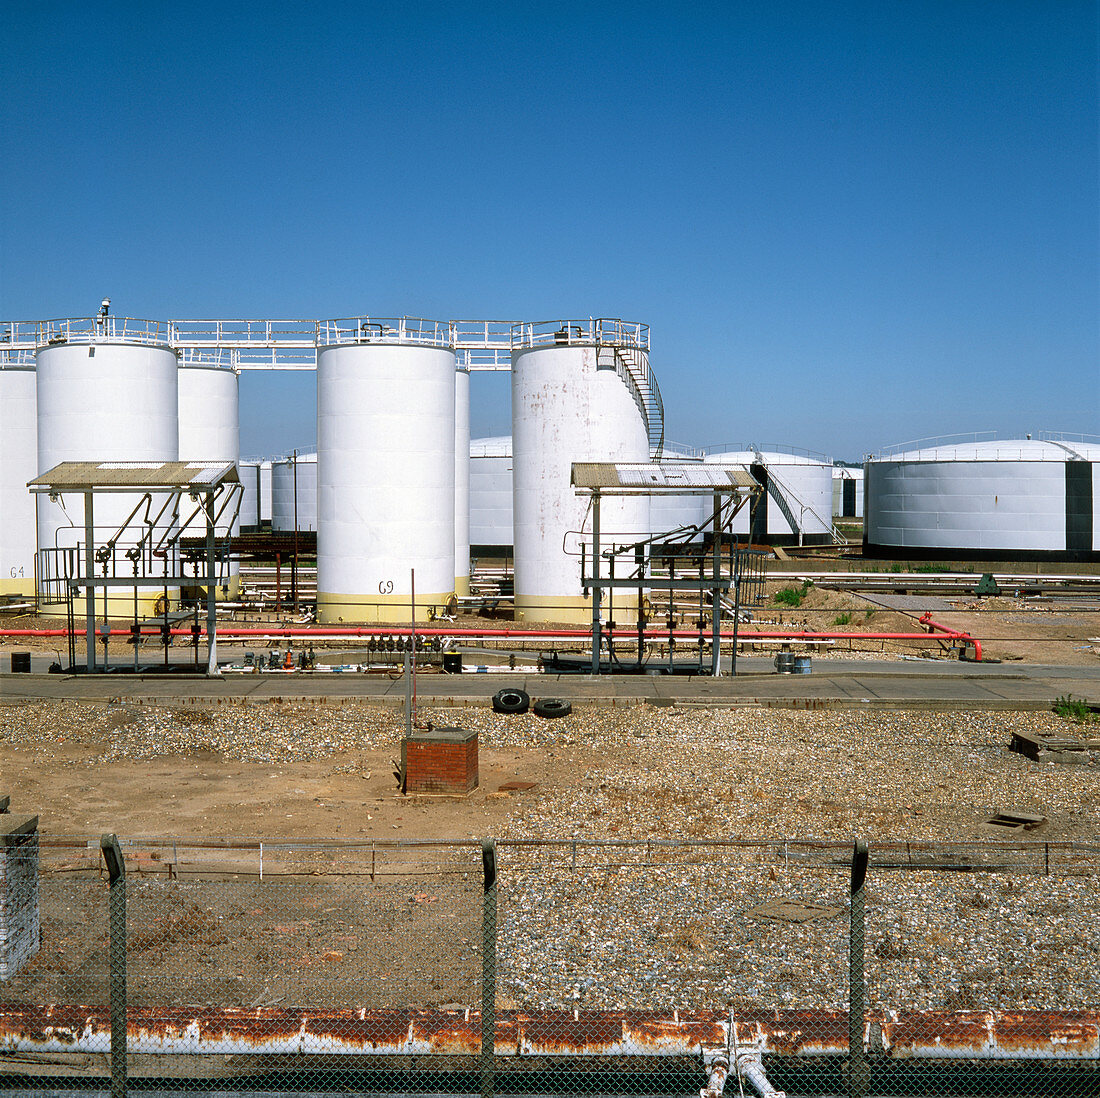 Oil storage depot